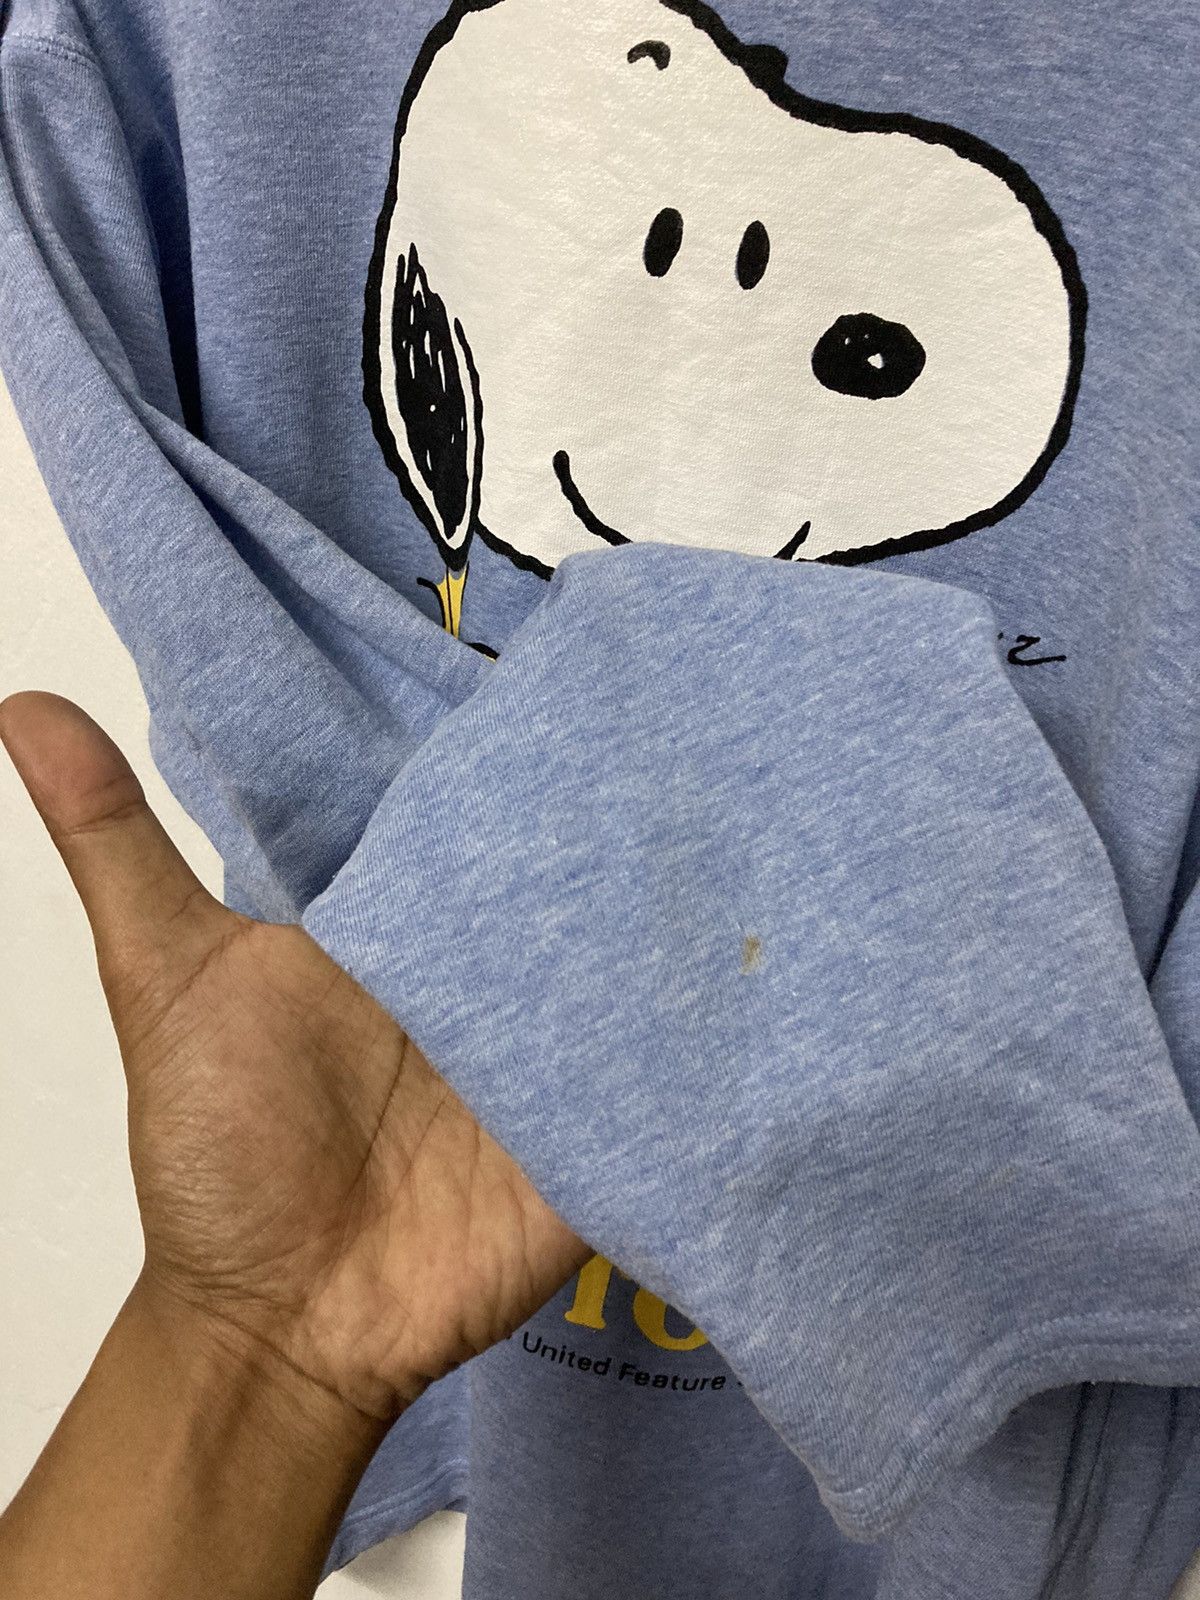 Peanuts - Snoopy and Woodstock Turtle Neck Sweatshirt - 11